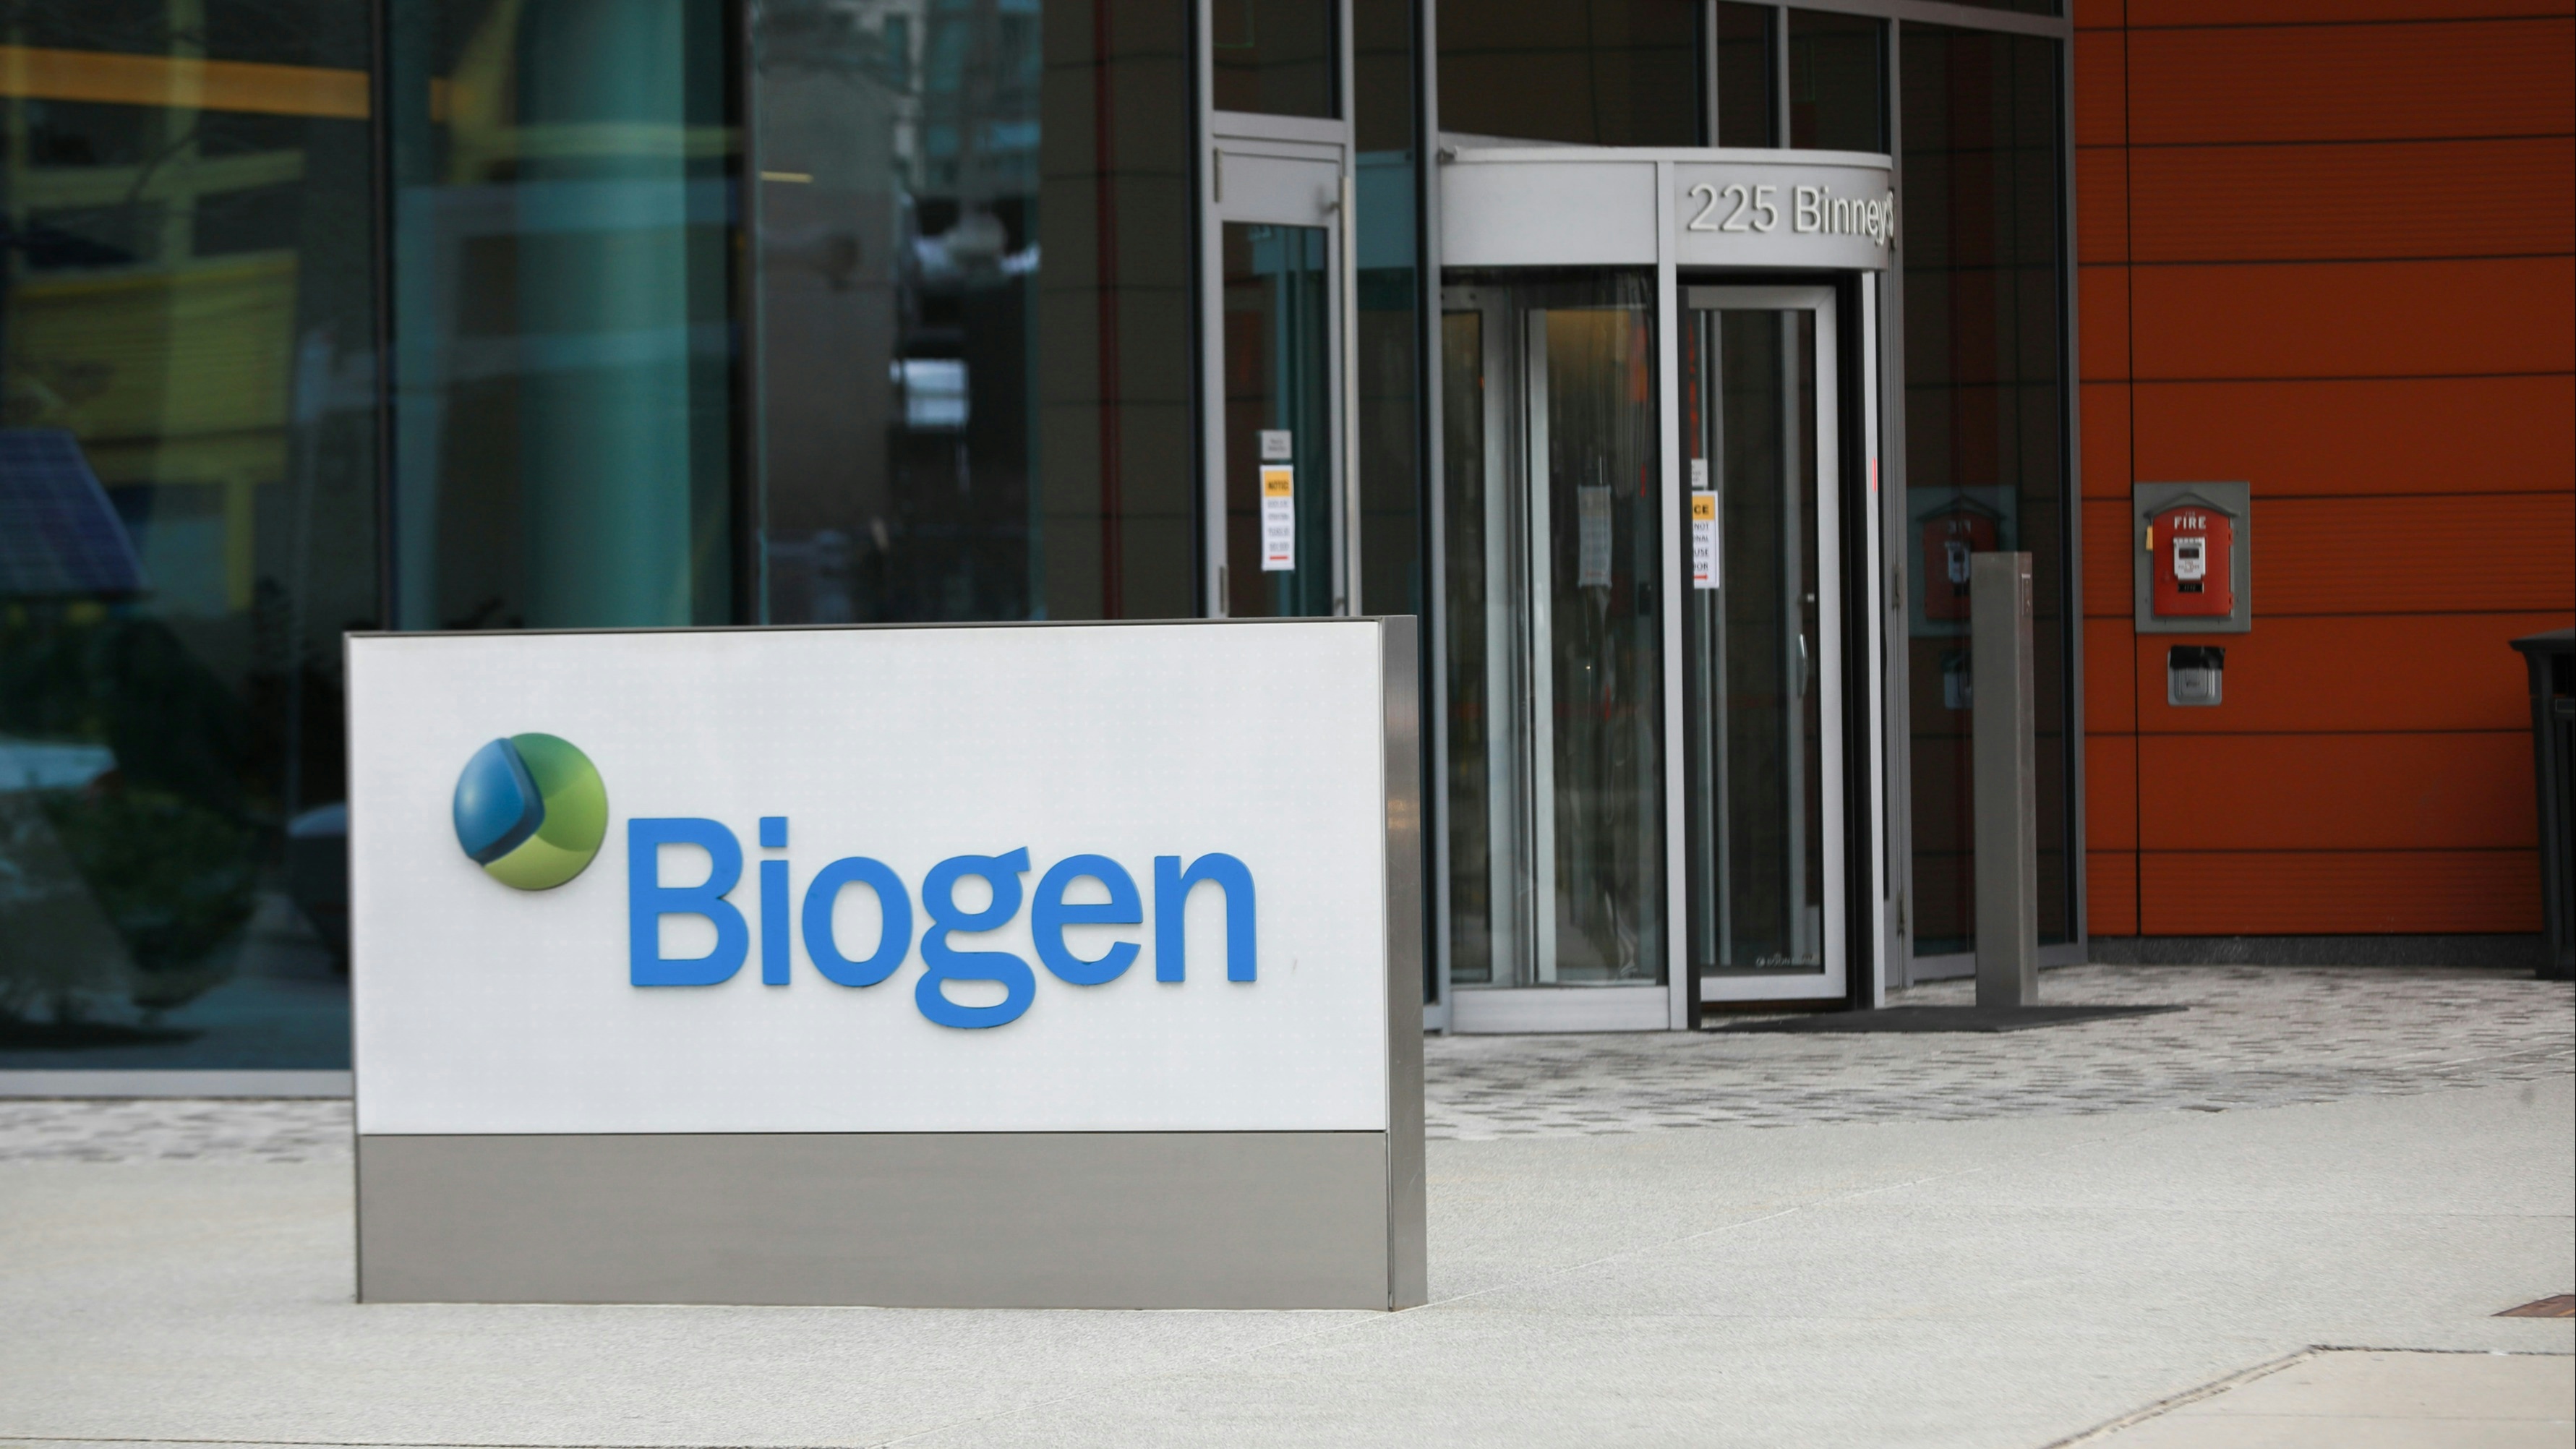 Biogen headquarters on Binney Street on Thursday, March 21, 2019 in Cambridge, Massachusetts.